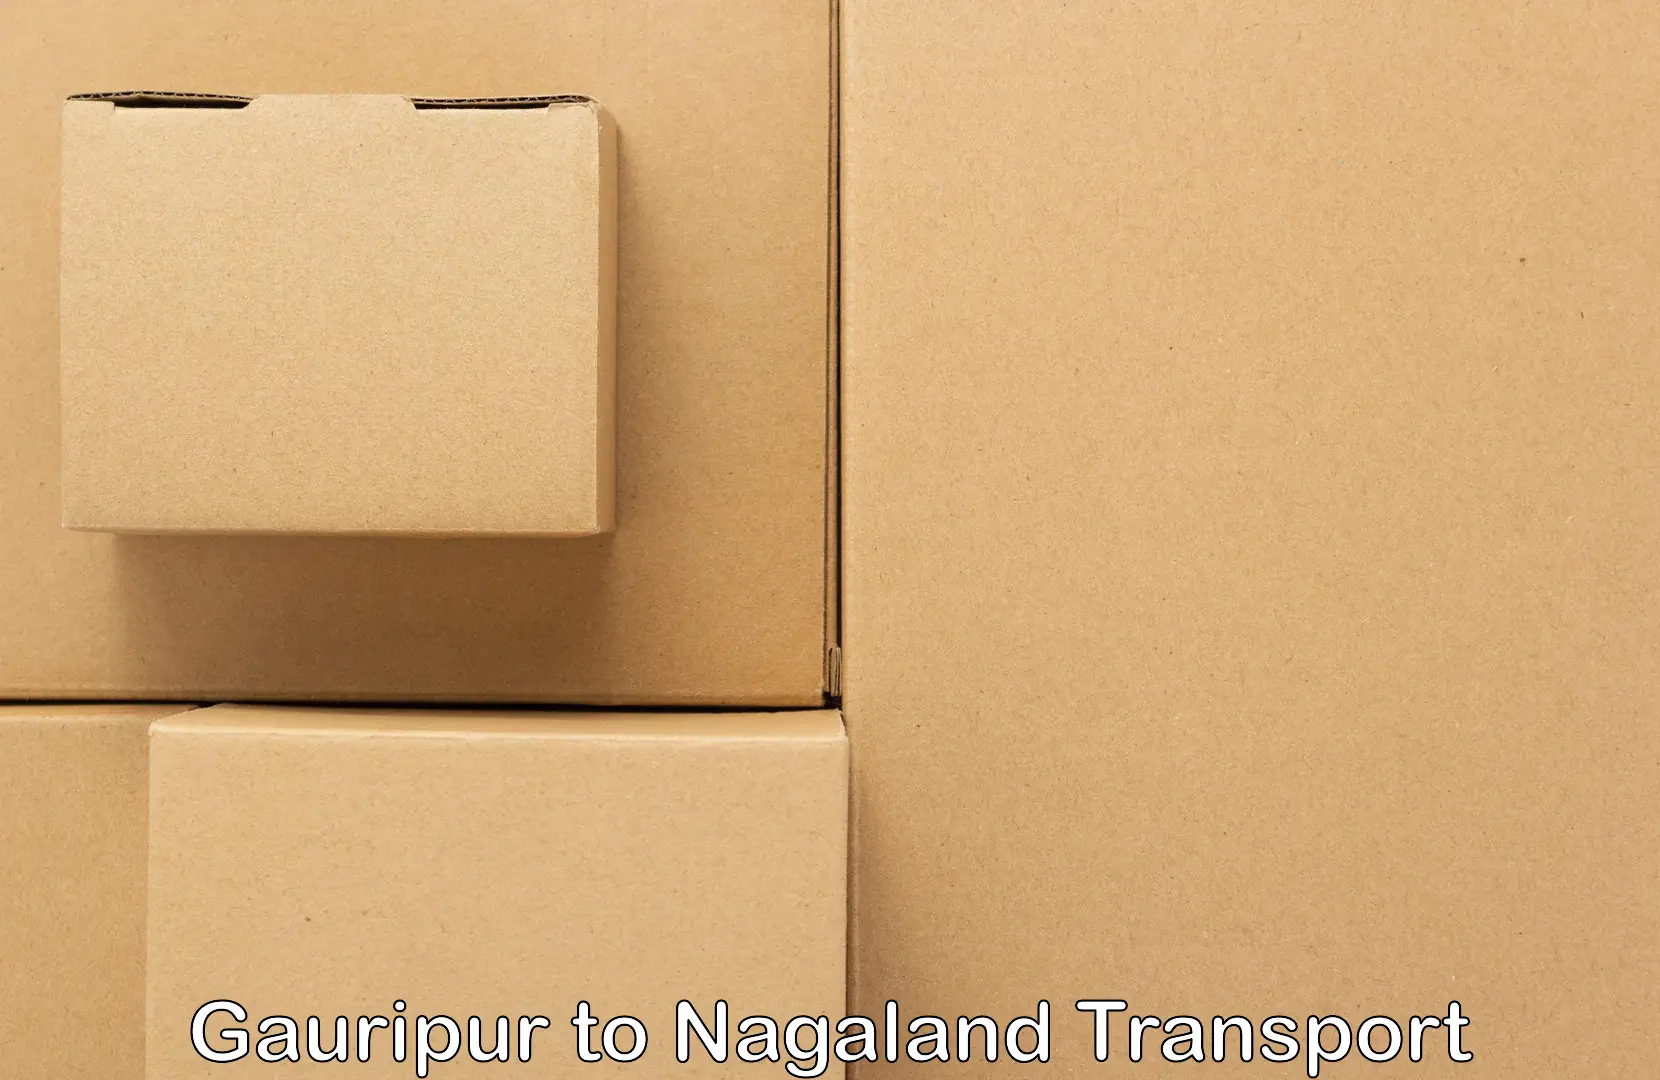 Shipping partner Gauripur to Dimapur